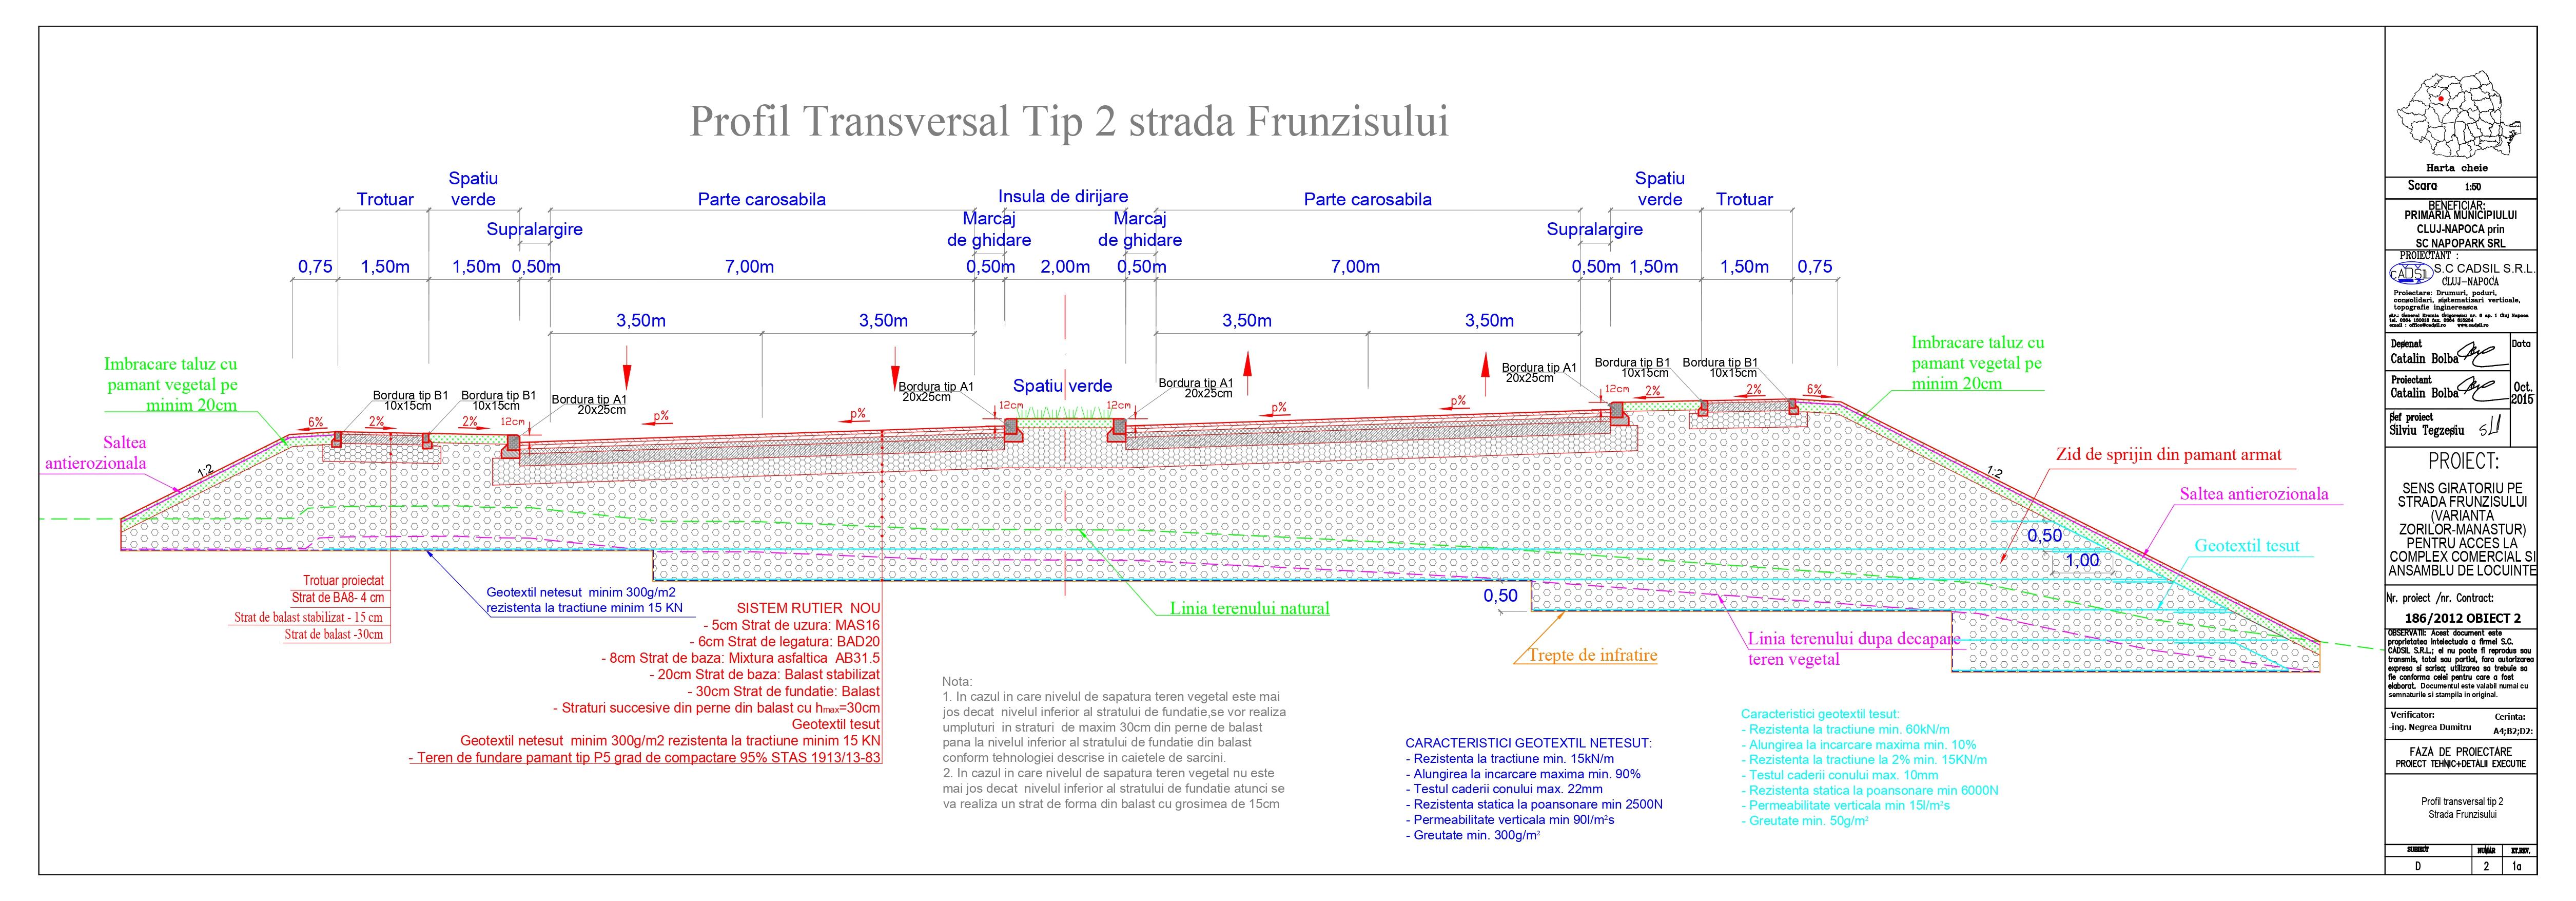 13_D2_Profil transversal tip 2 strada Frunzisului_page-0001.jpg